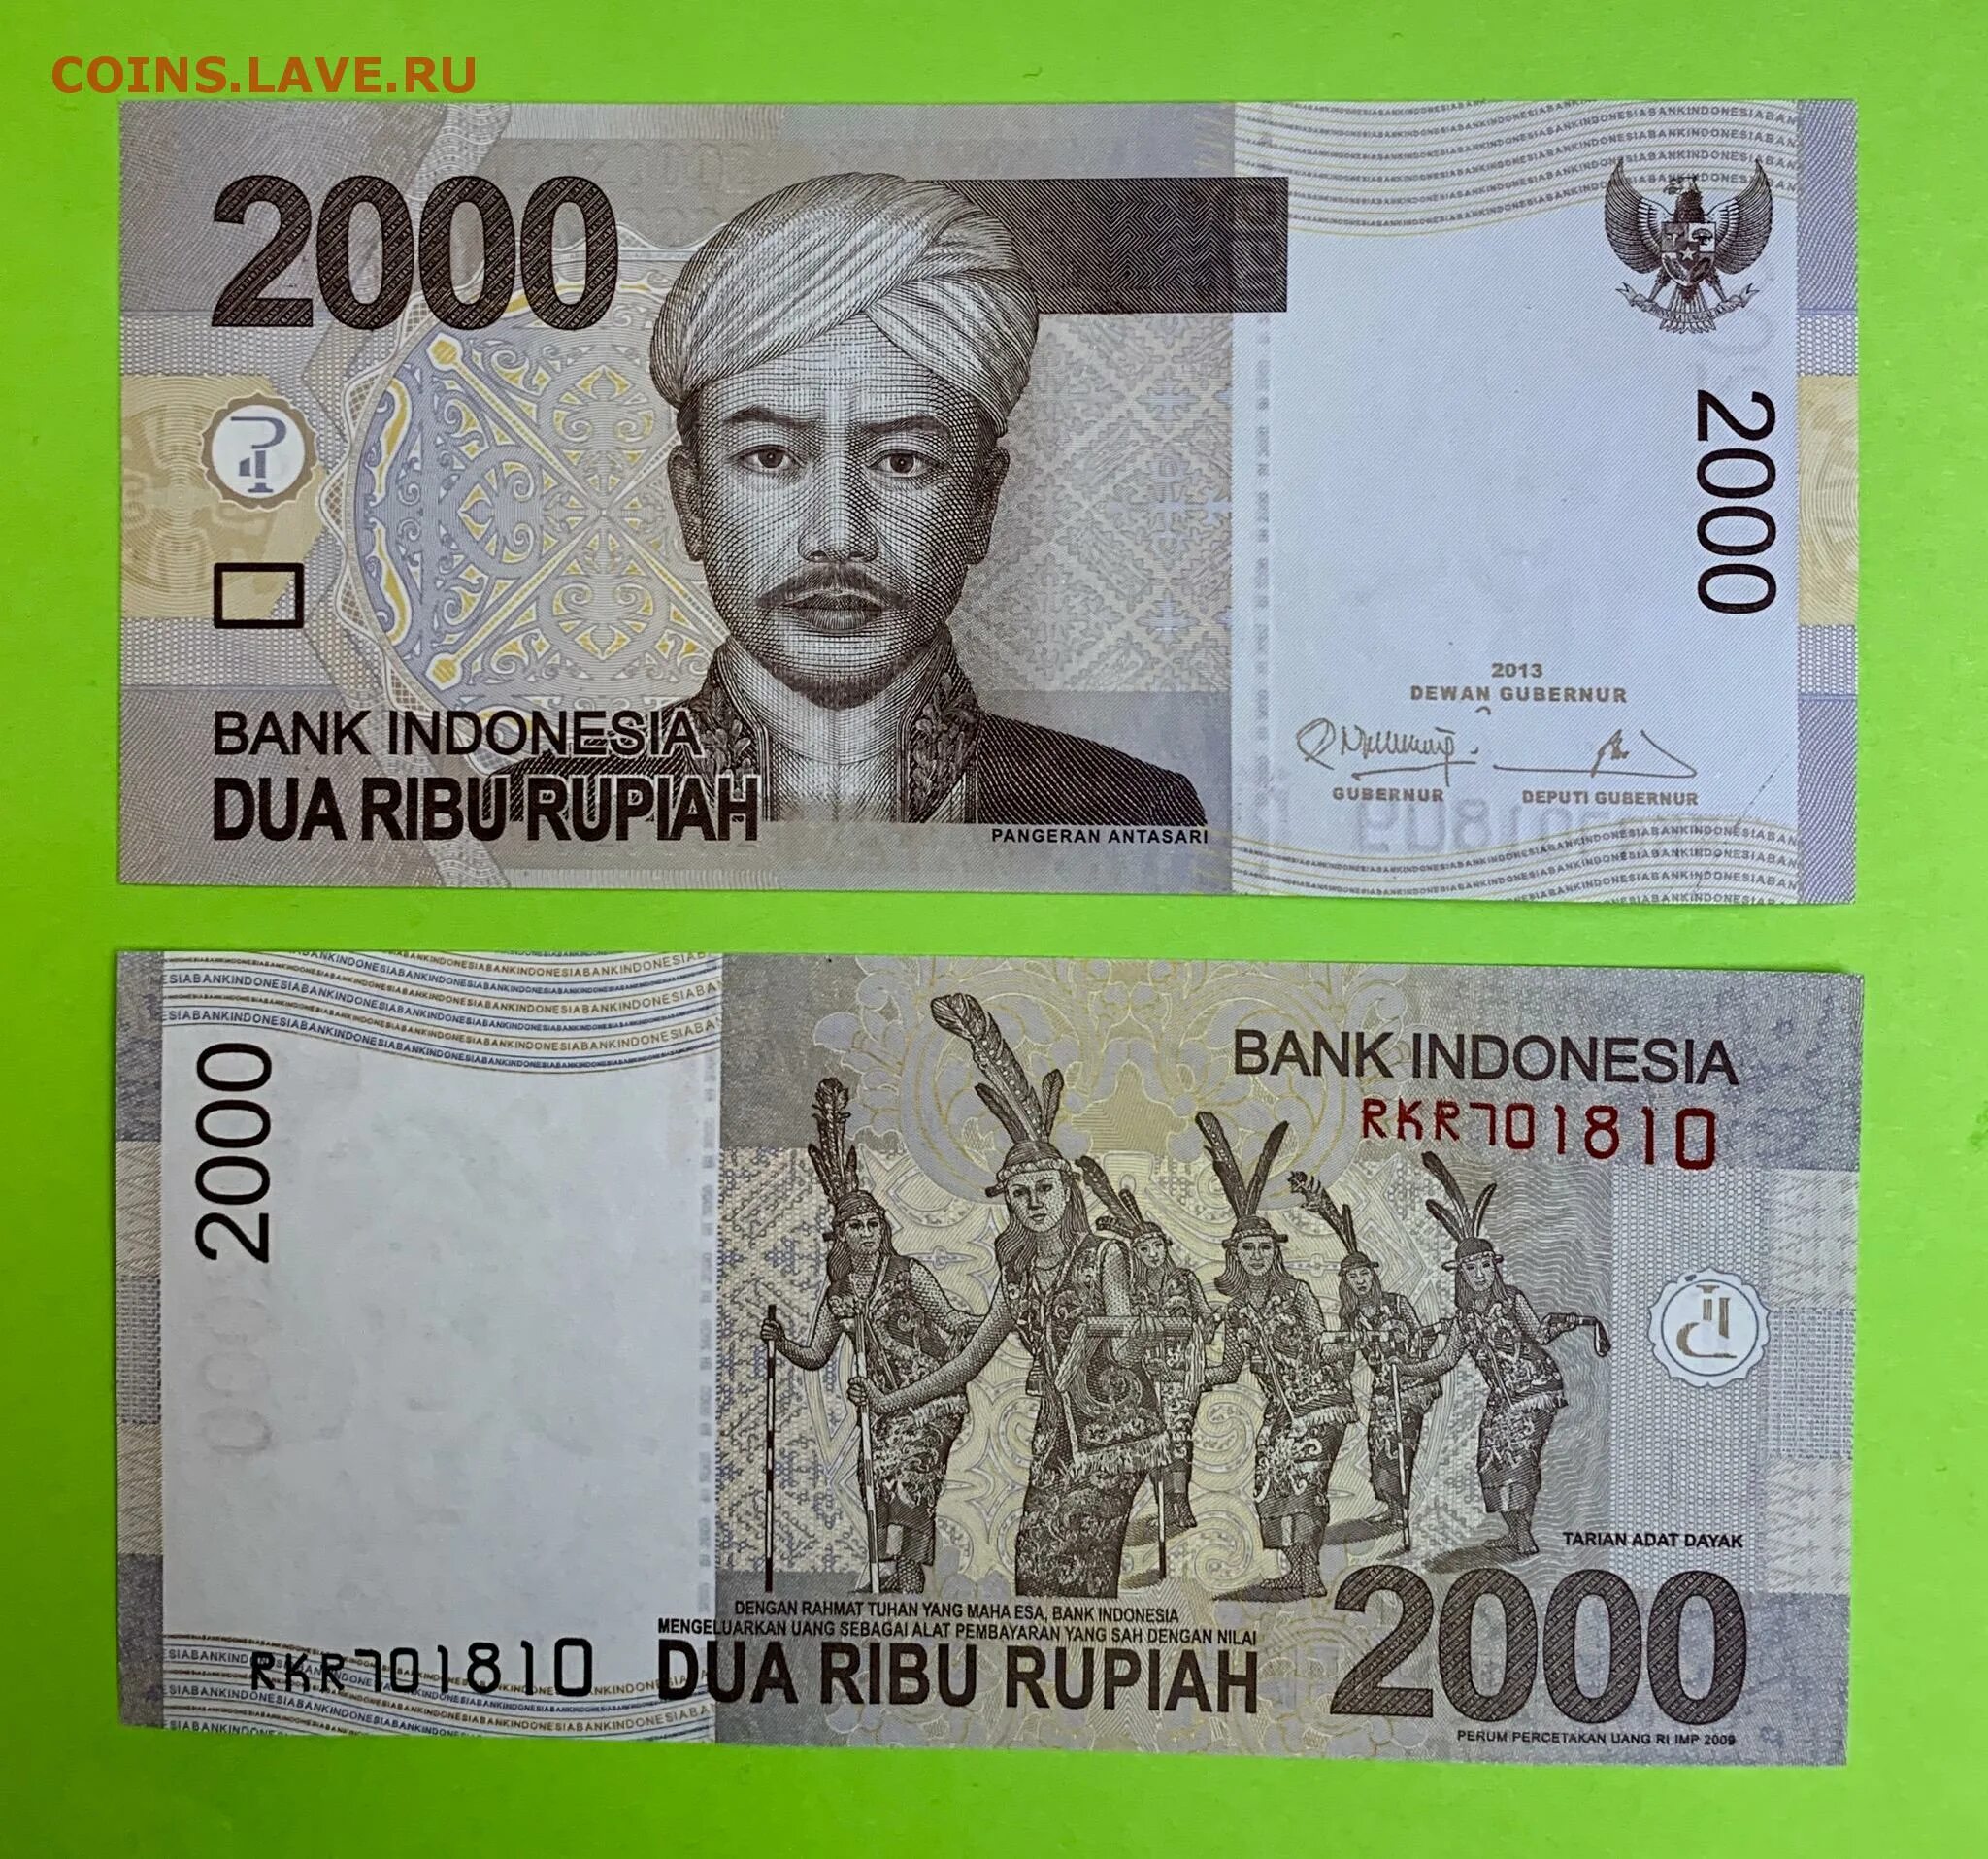 2000 Рупий. 2000 Рупий в рублях. 2000 Индонезийских рупий в рублях. Bank Indonesia Dua ribu Rupiah 2000.